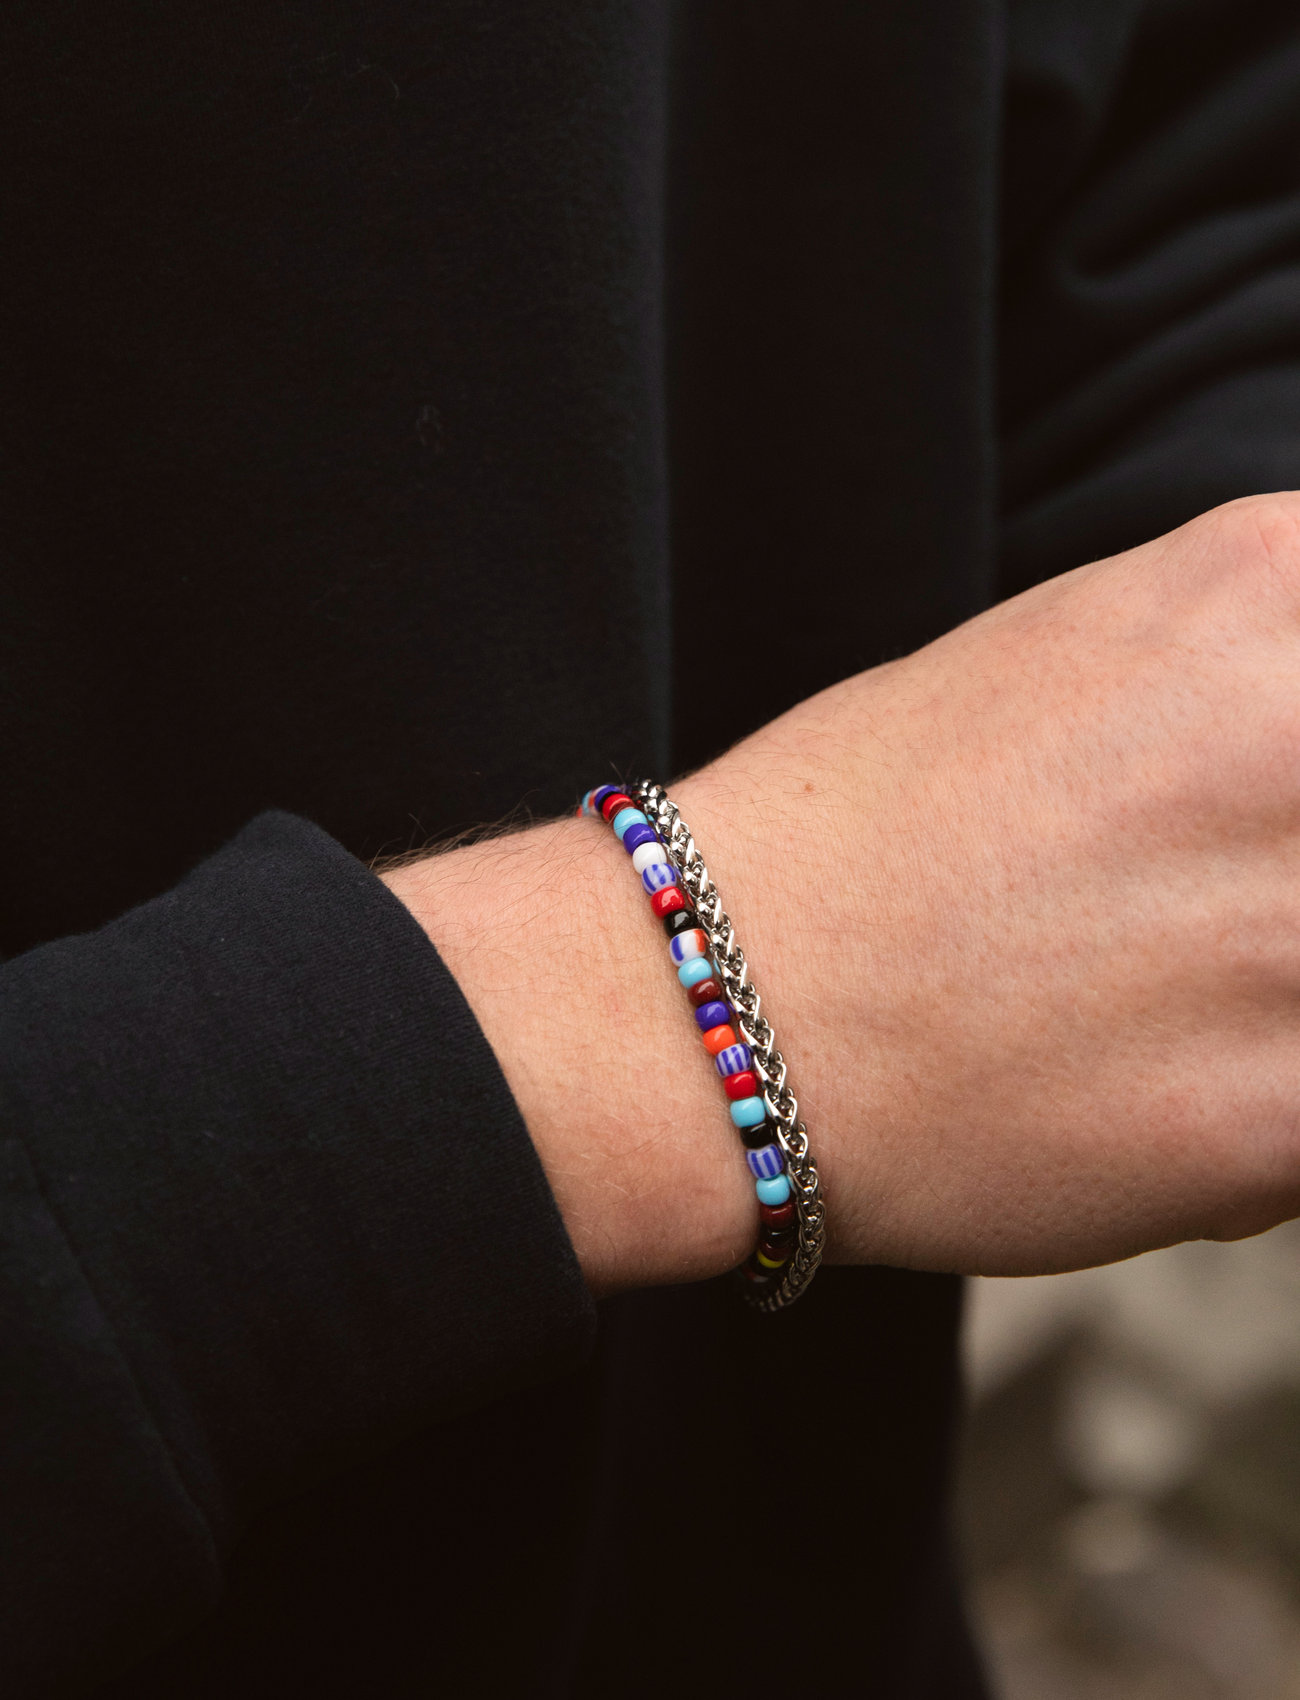 Samie - Samie - Bracelet with colored pearls - pērļu rokassprādzes - sws - 1